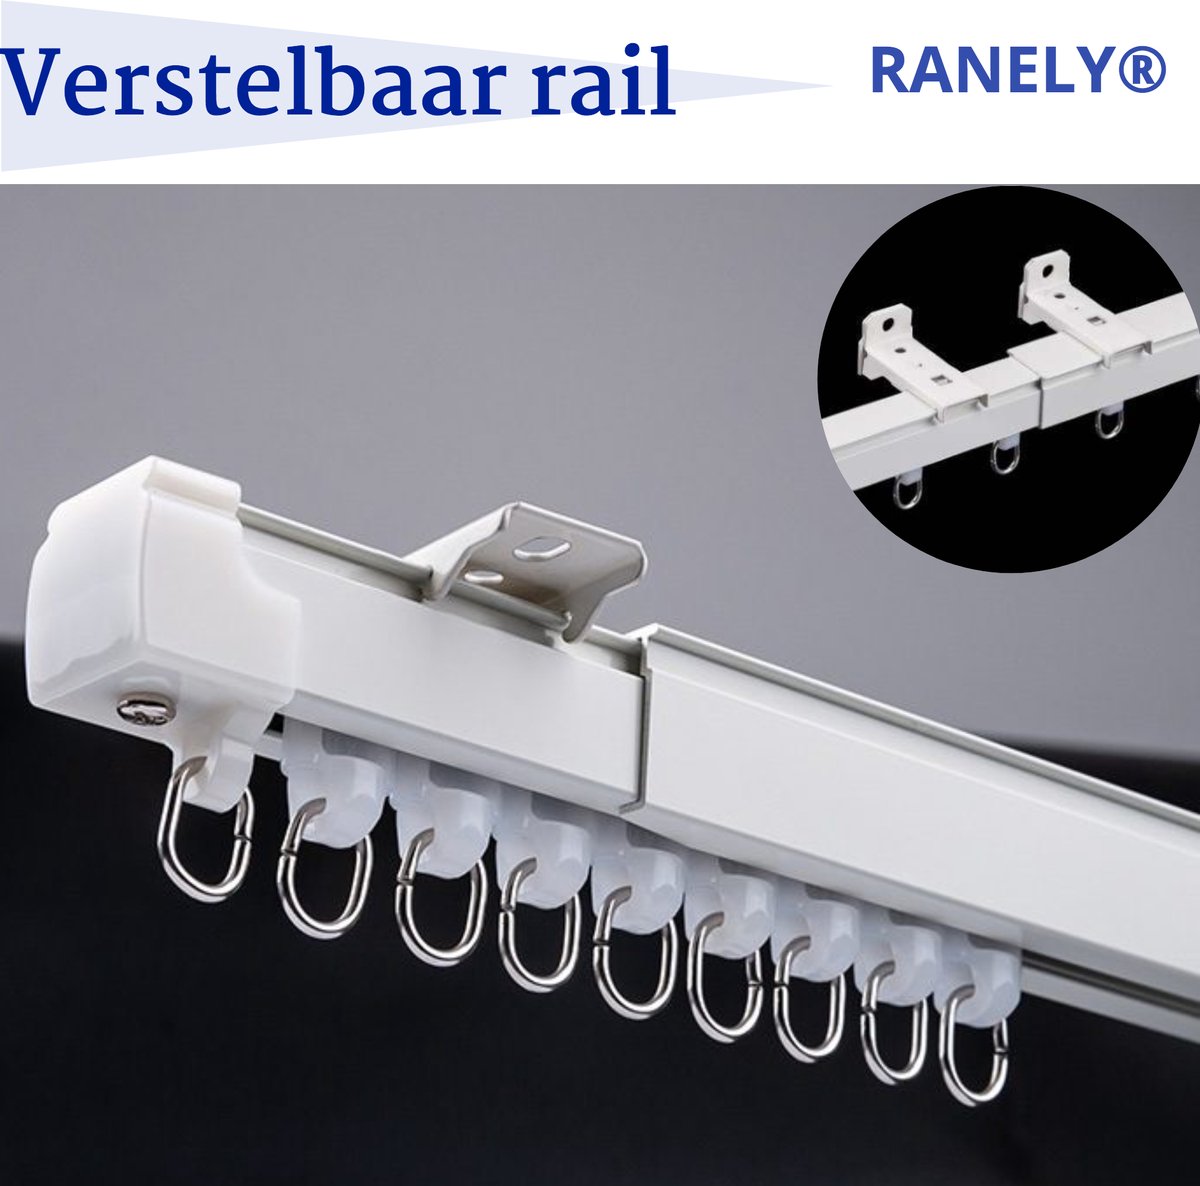 RANELY® Aluminium gordijnrail set - plafondbevestiging - gordijnrails compleet - kant en klaar gordijnroede